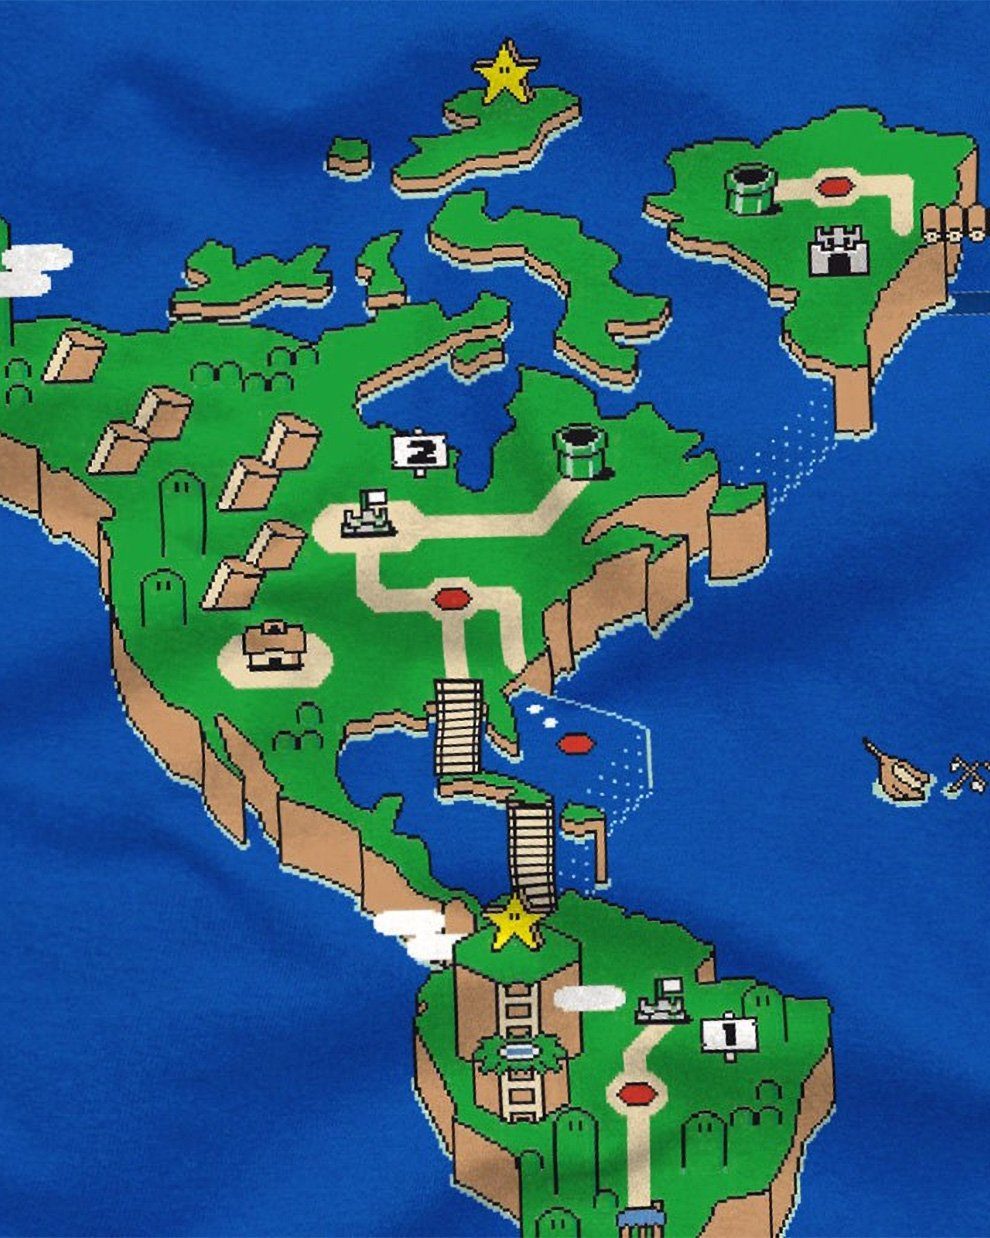 konsole videospiel Print-Shirt style3 Weltkarte super T-Shirt n64 snes Mario Kinder